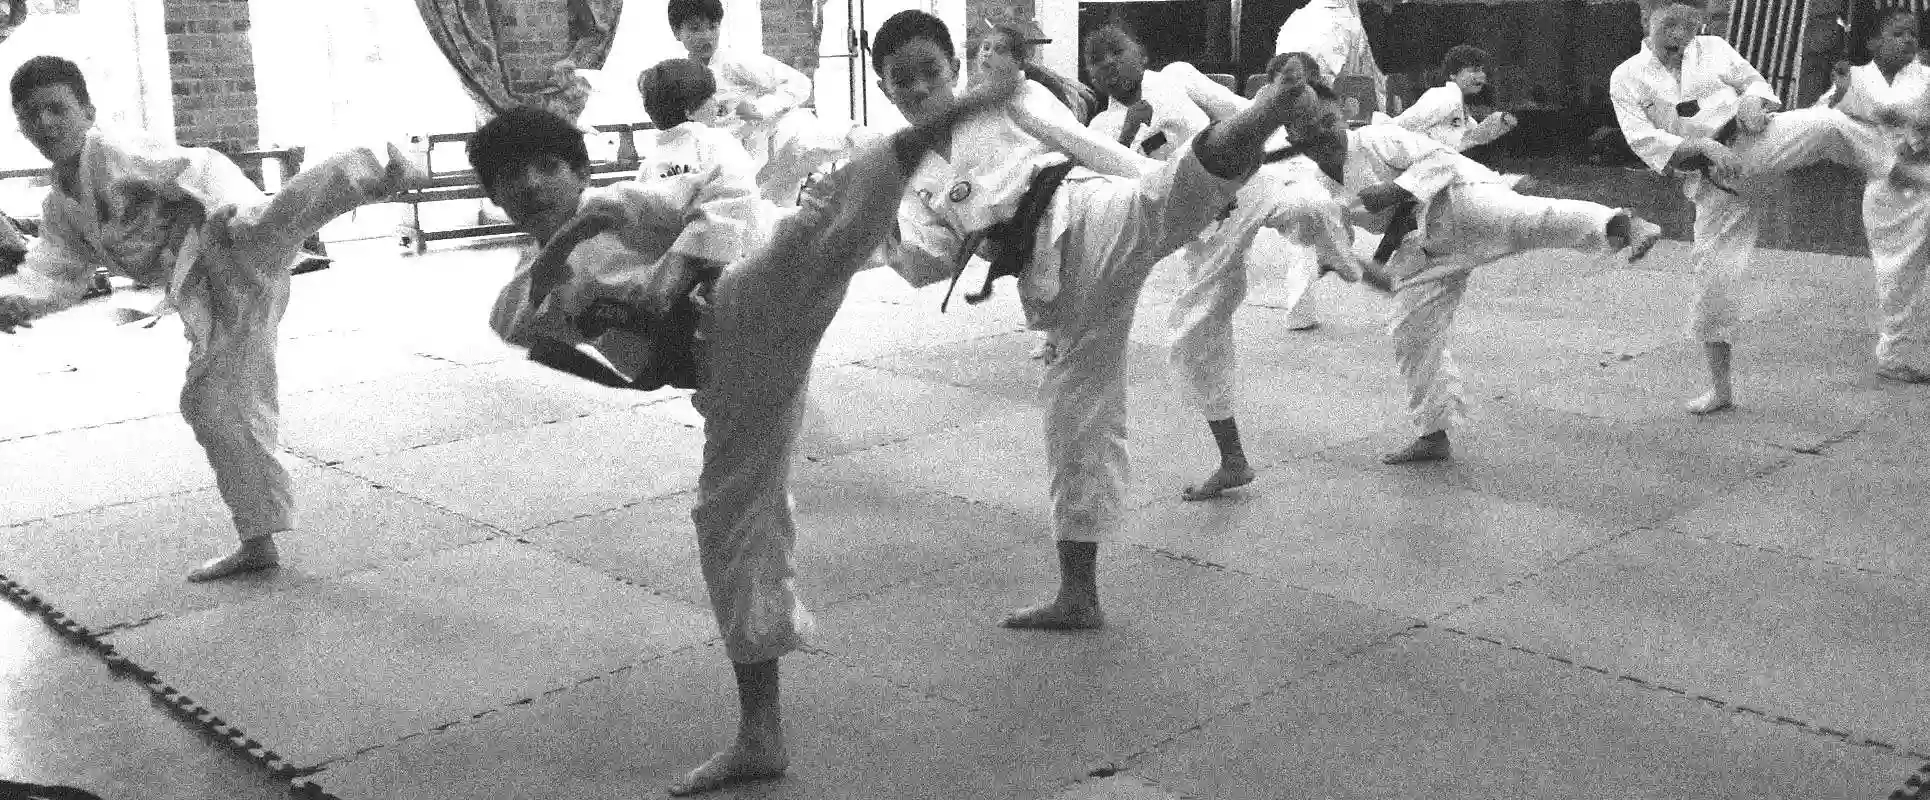 DAN Taekwondo School